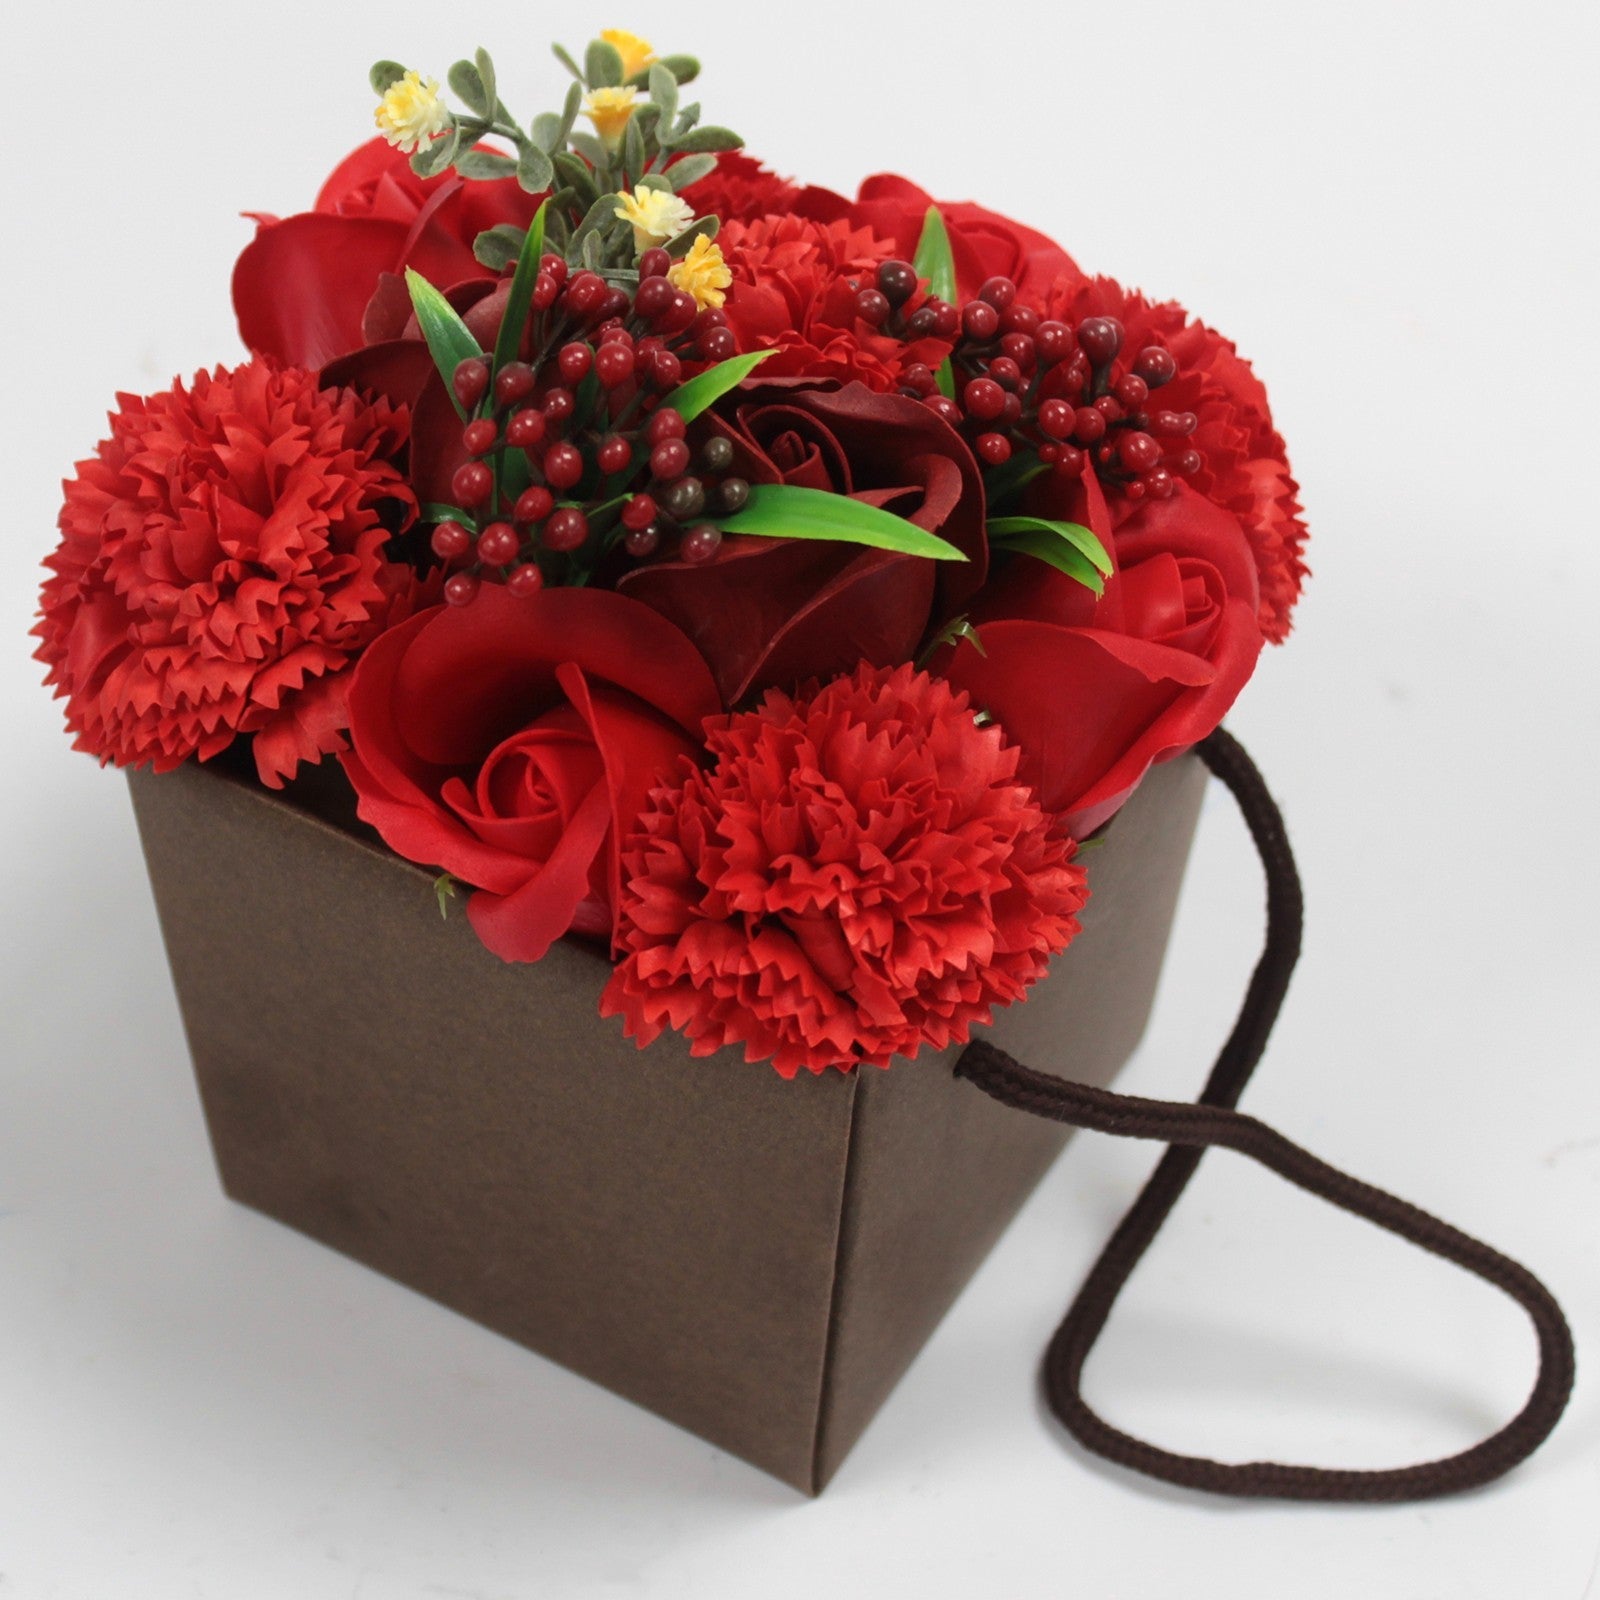 Soap Flower Bouquet - Red Rose & Carnation Gift Bag - Ultrabee